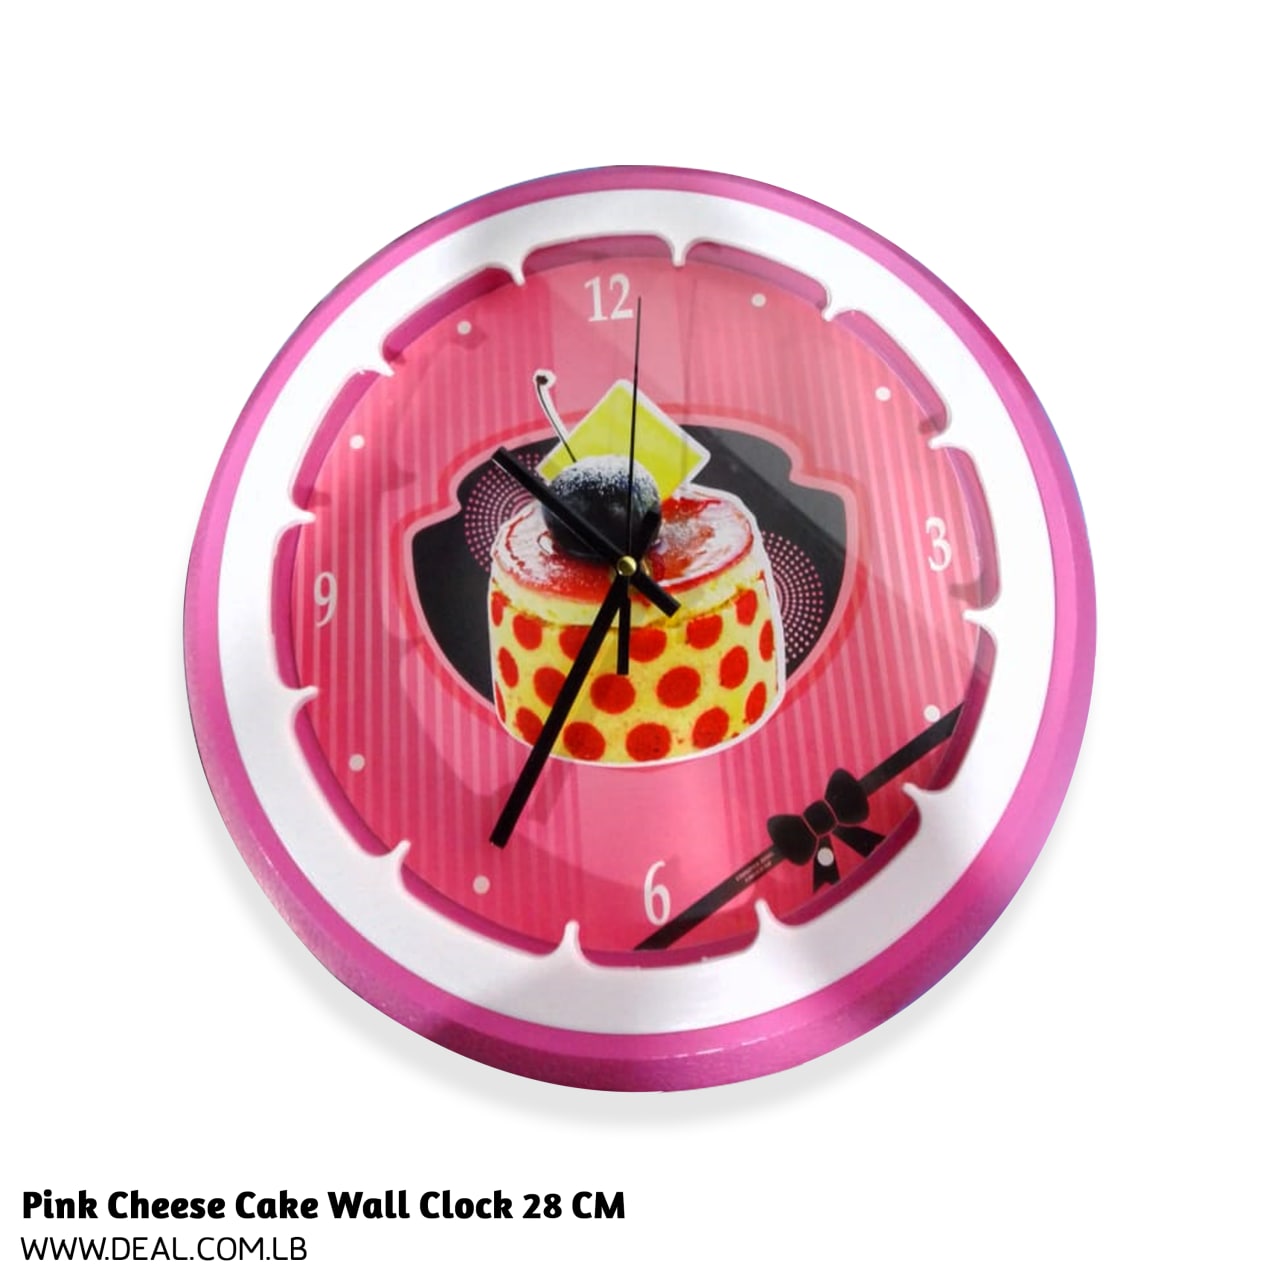 Pink Cheese Cake Wall Clock 28 CM